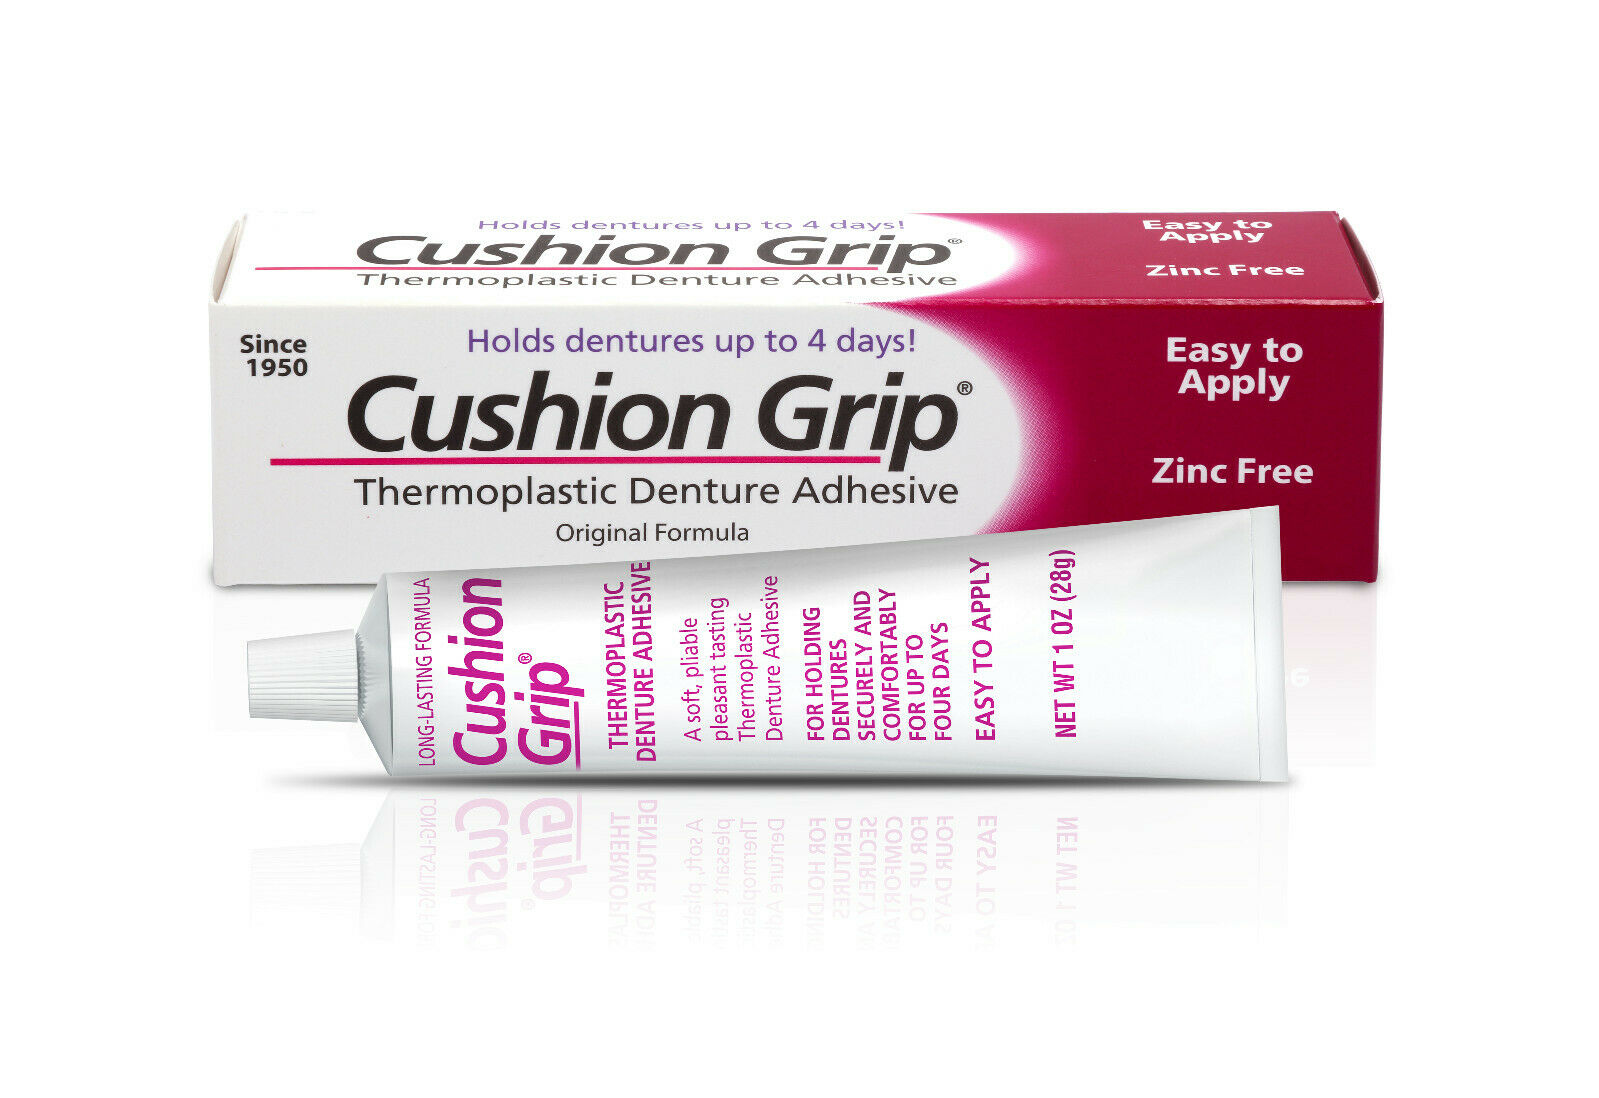 Cushion Grip Thermoplastic Denture Adhesive 1 Oz - Zinc Free